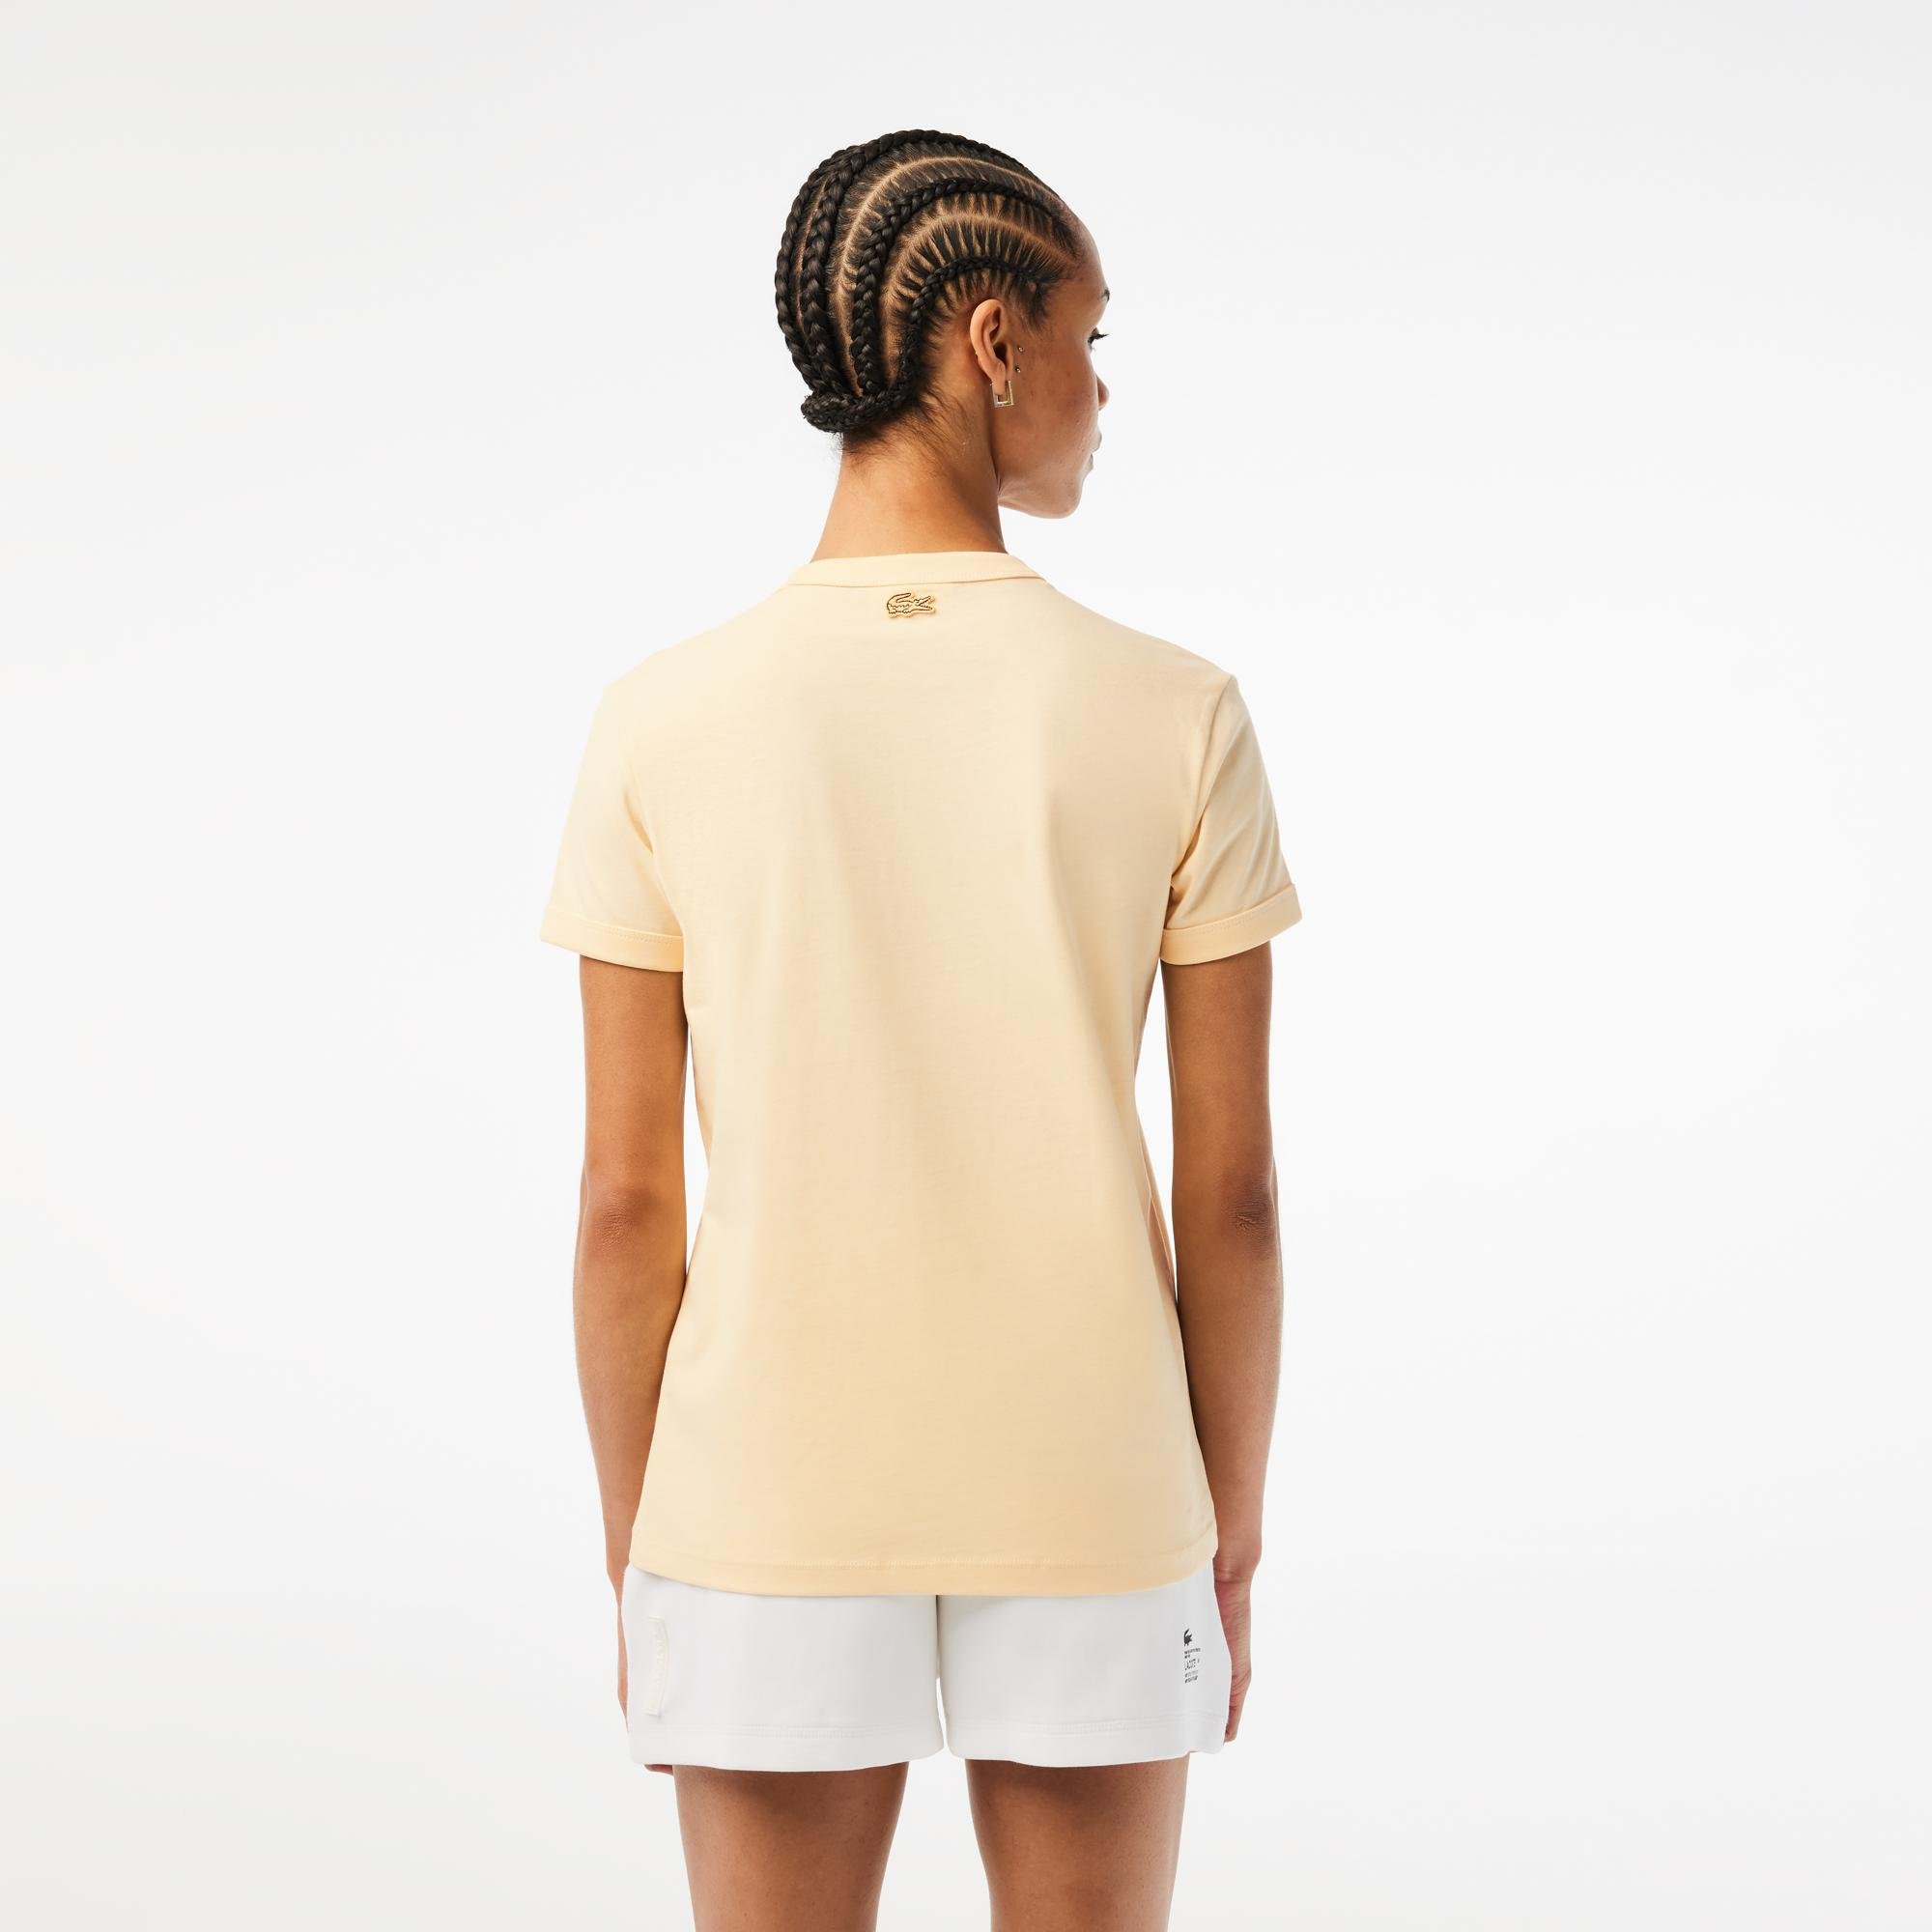 Lacoste Women’s Slim Fit Organic Cotton Jersey T-shirt